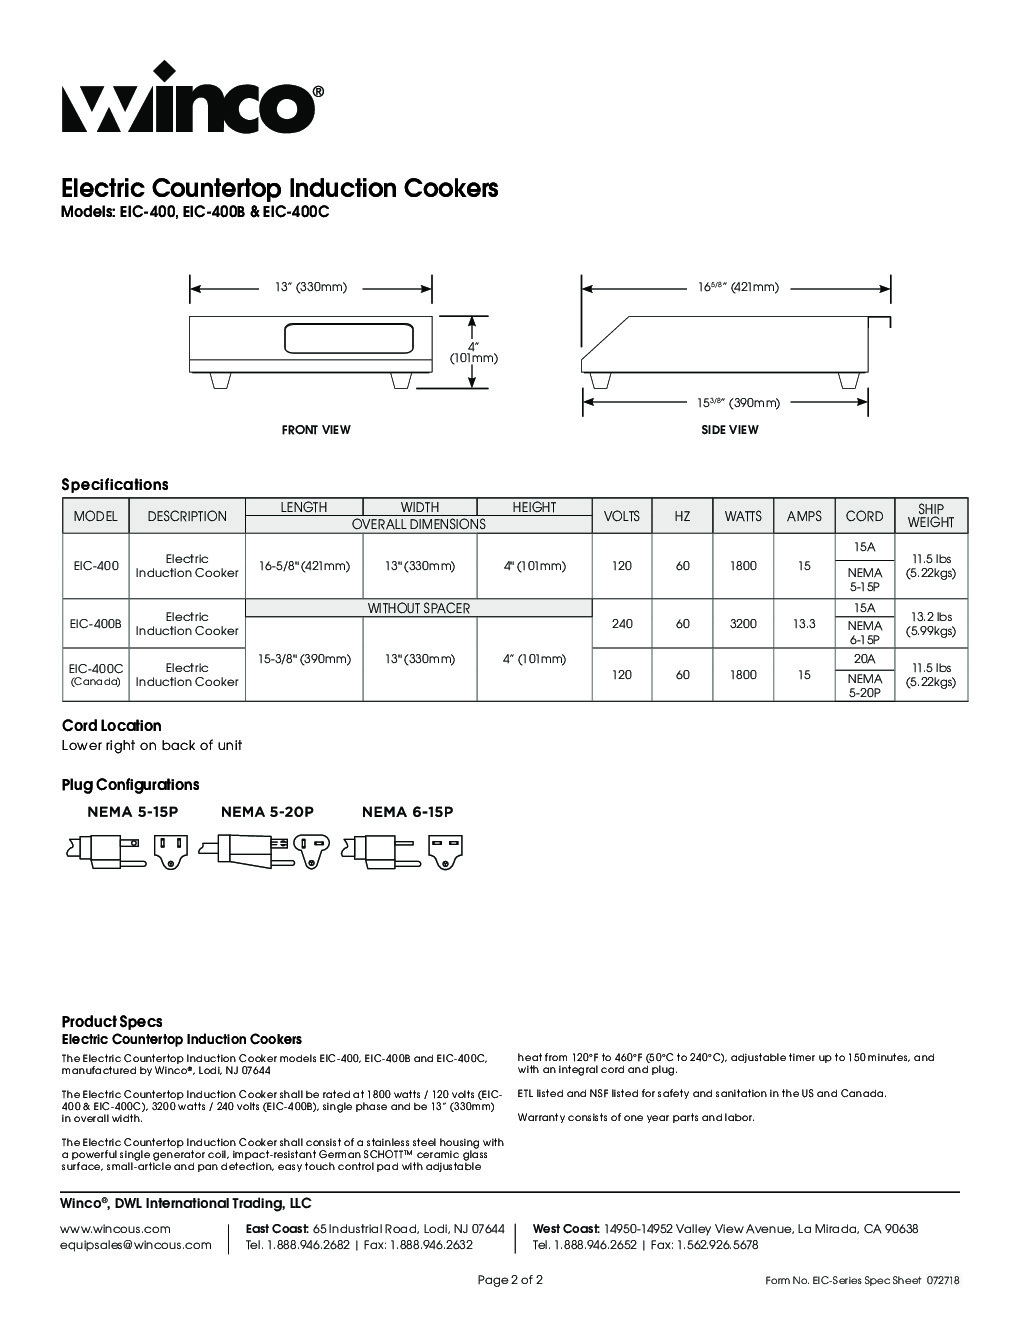 Winco EIC-400B Countertop Induction Range